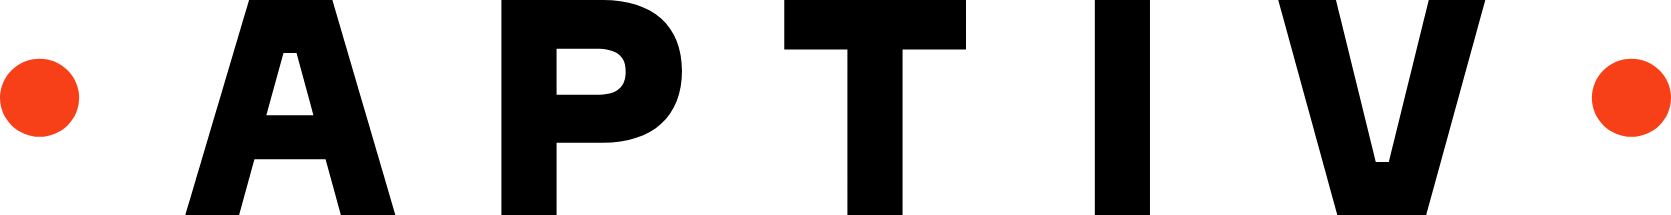 Aptiv logo large (transparent PNG)